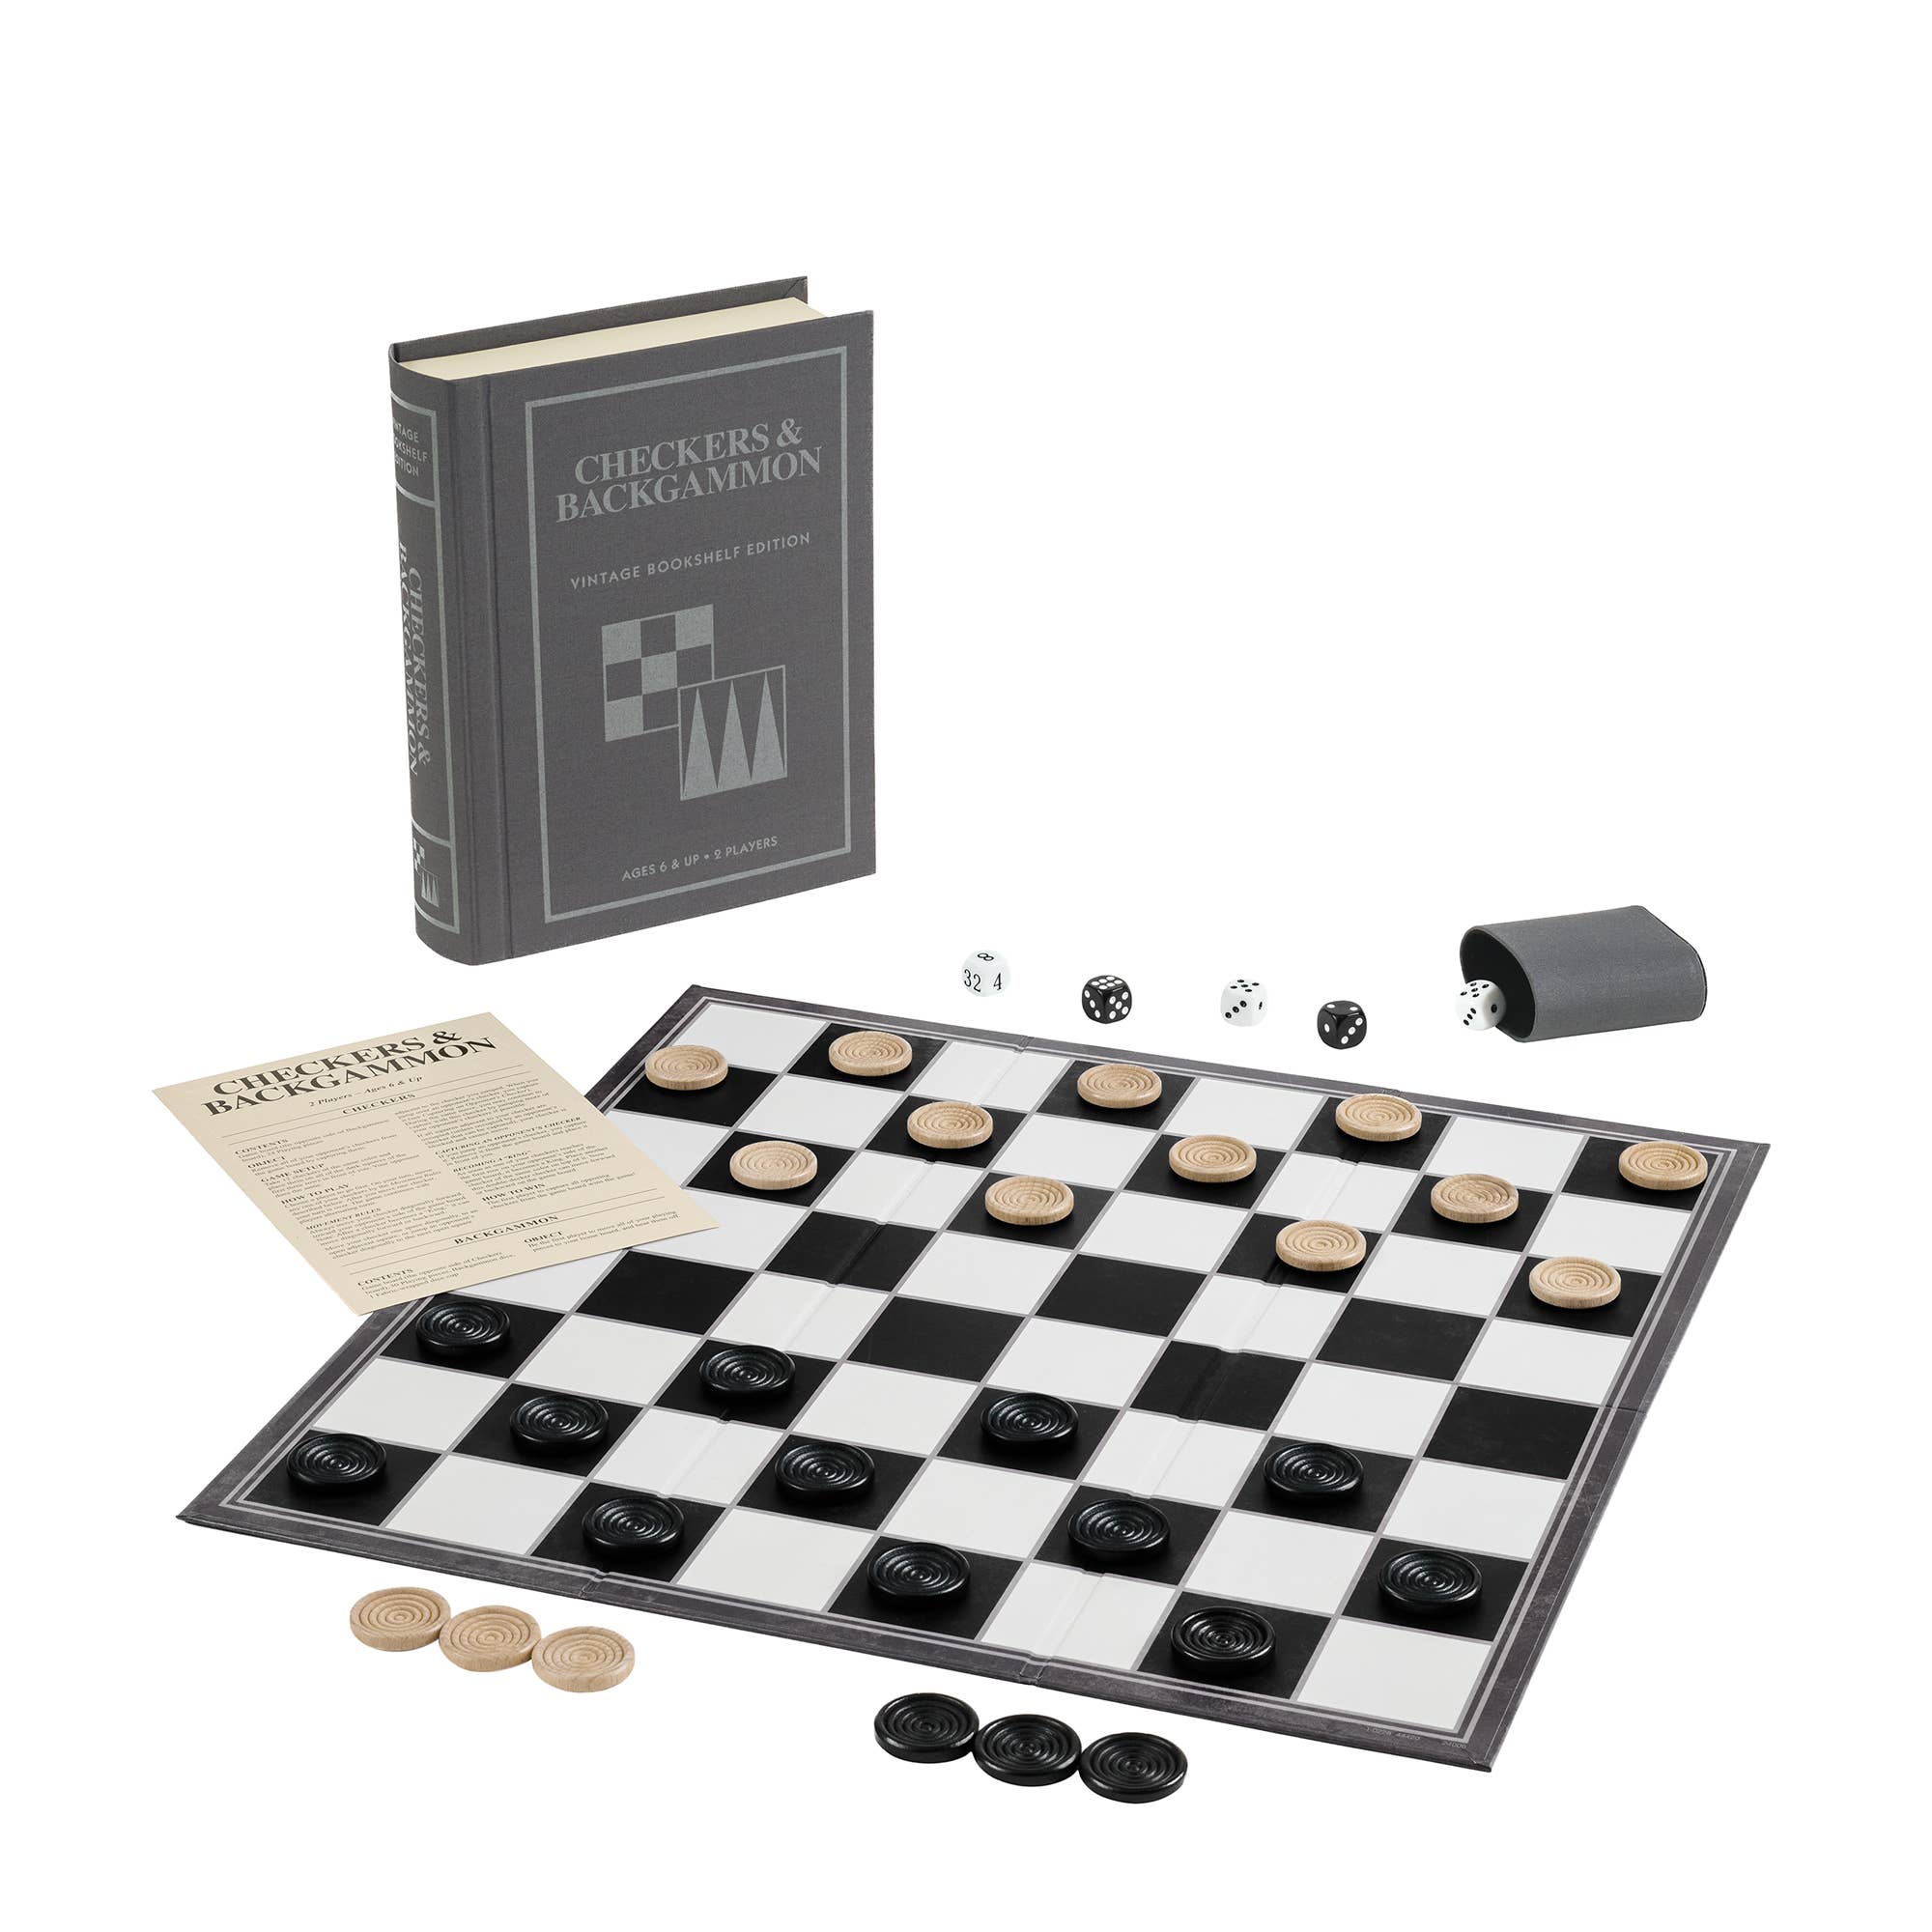 Checkers & Backgammon - Vintage Bookshelf Edition